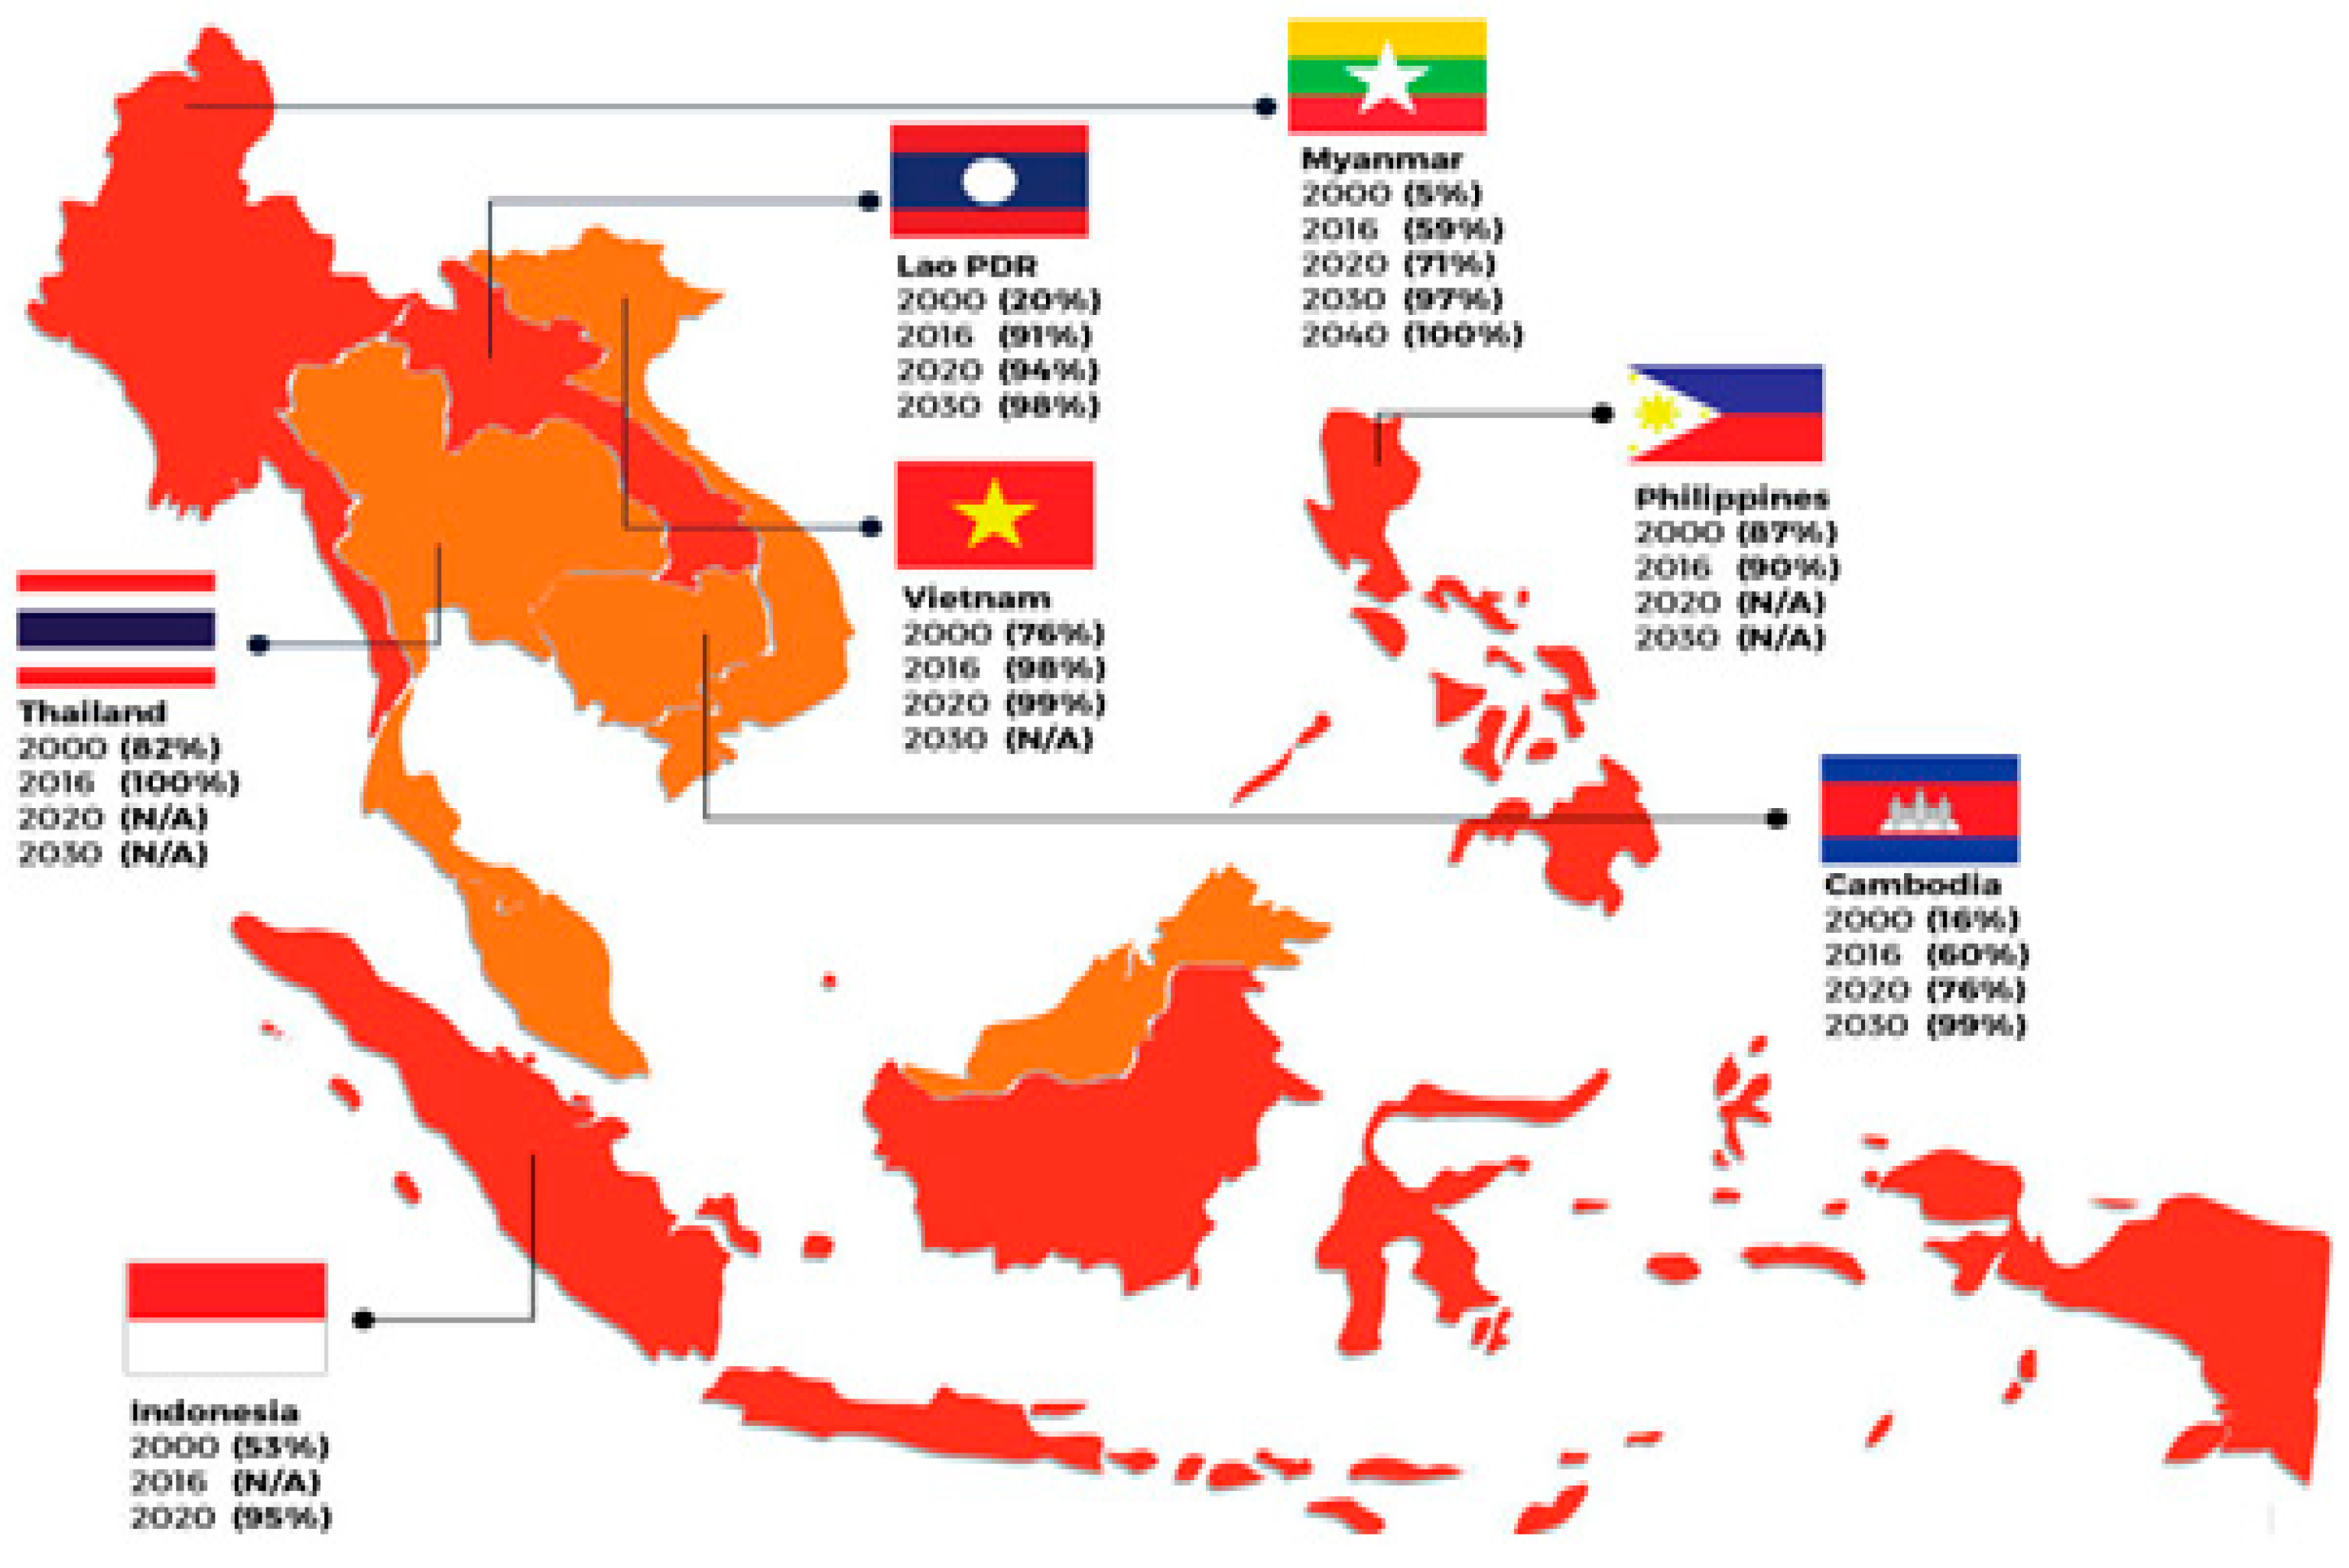 Vietnam's Drive Towards Renewable Energy - Source of Asia